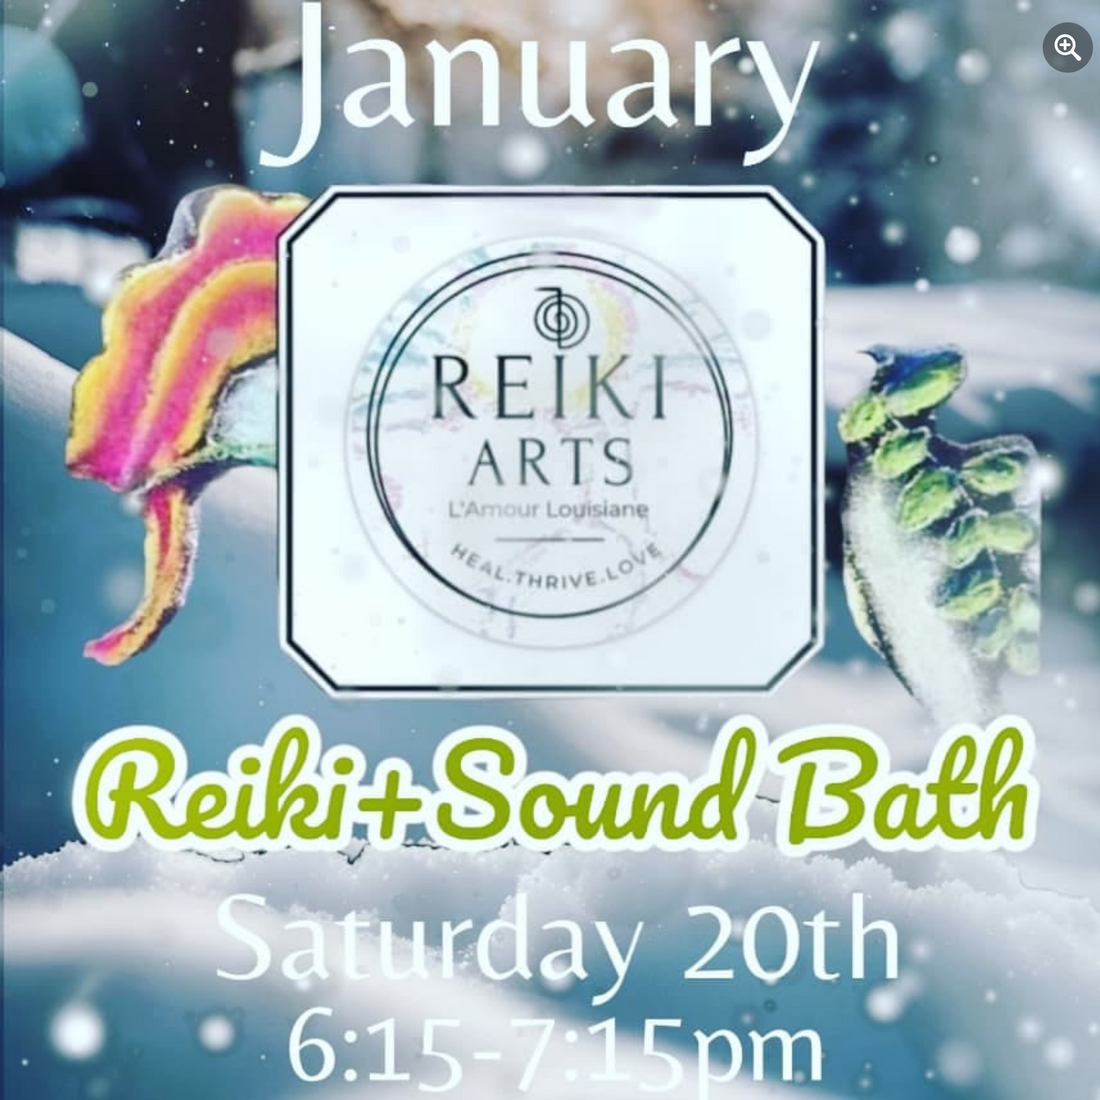 January Reiki+Sound Bath